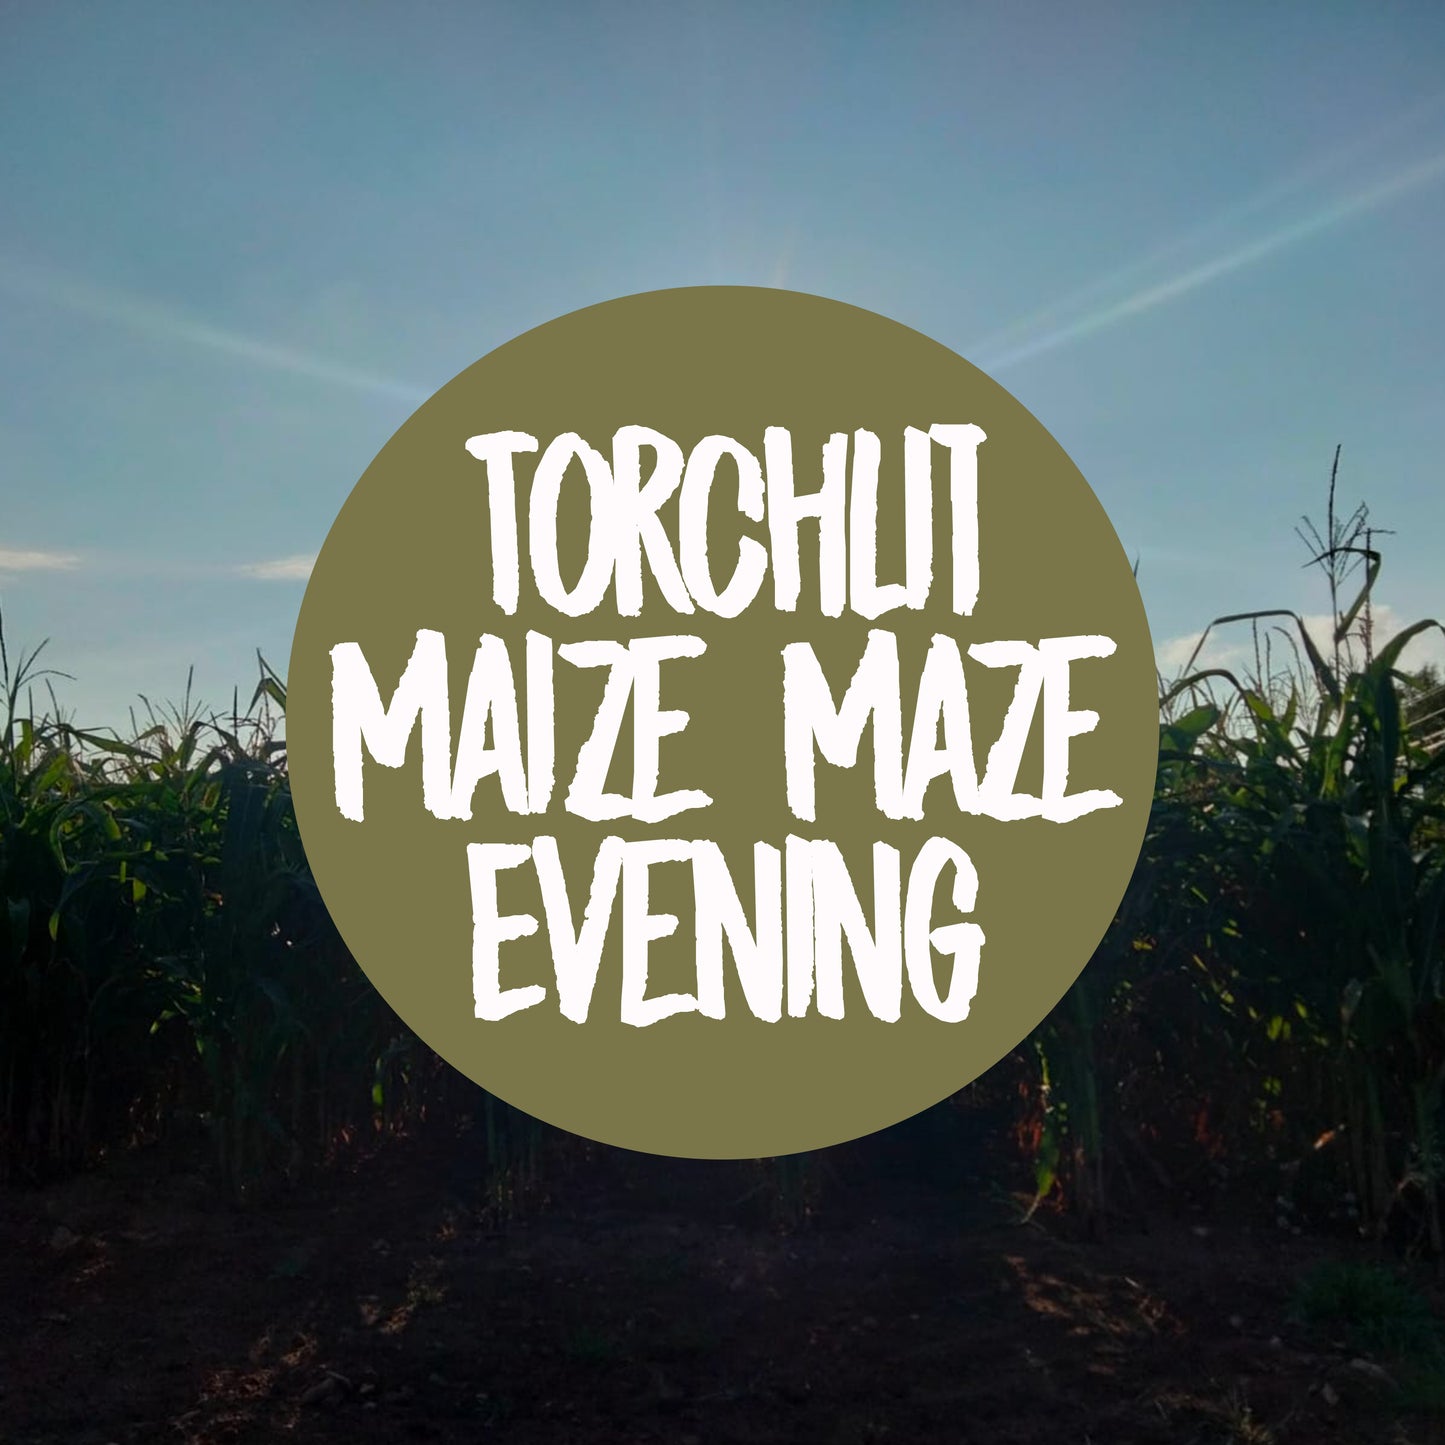 19th August - Torchlit Maize Maze